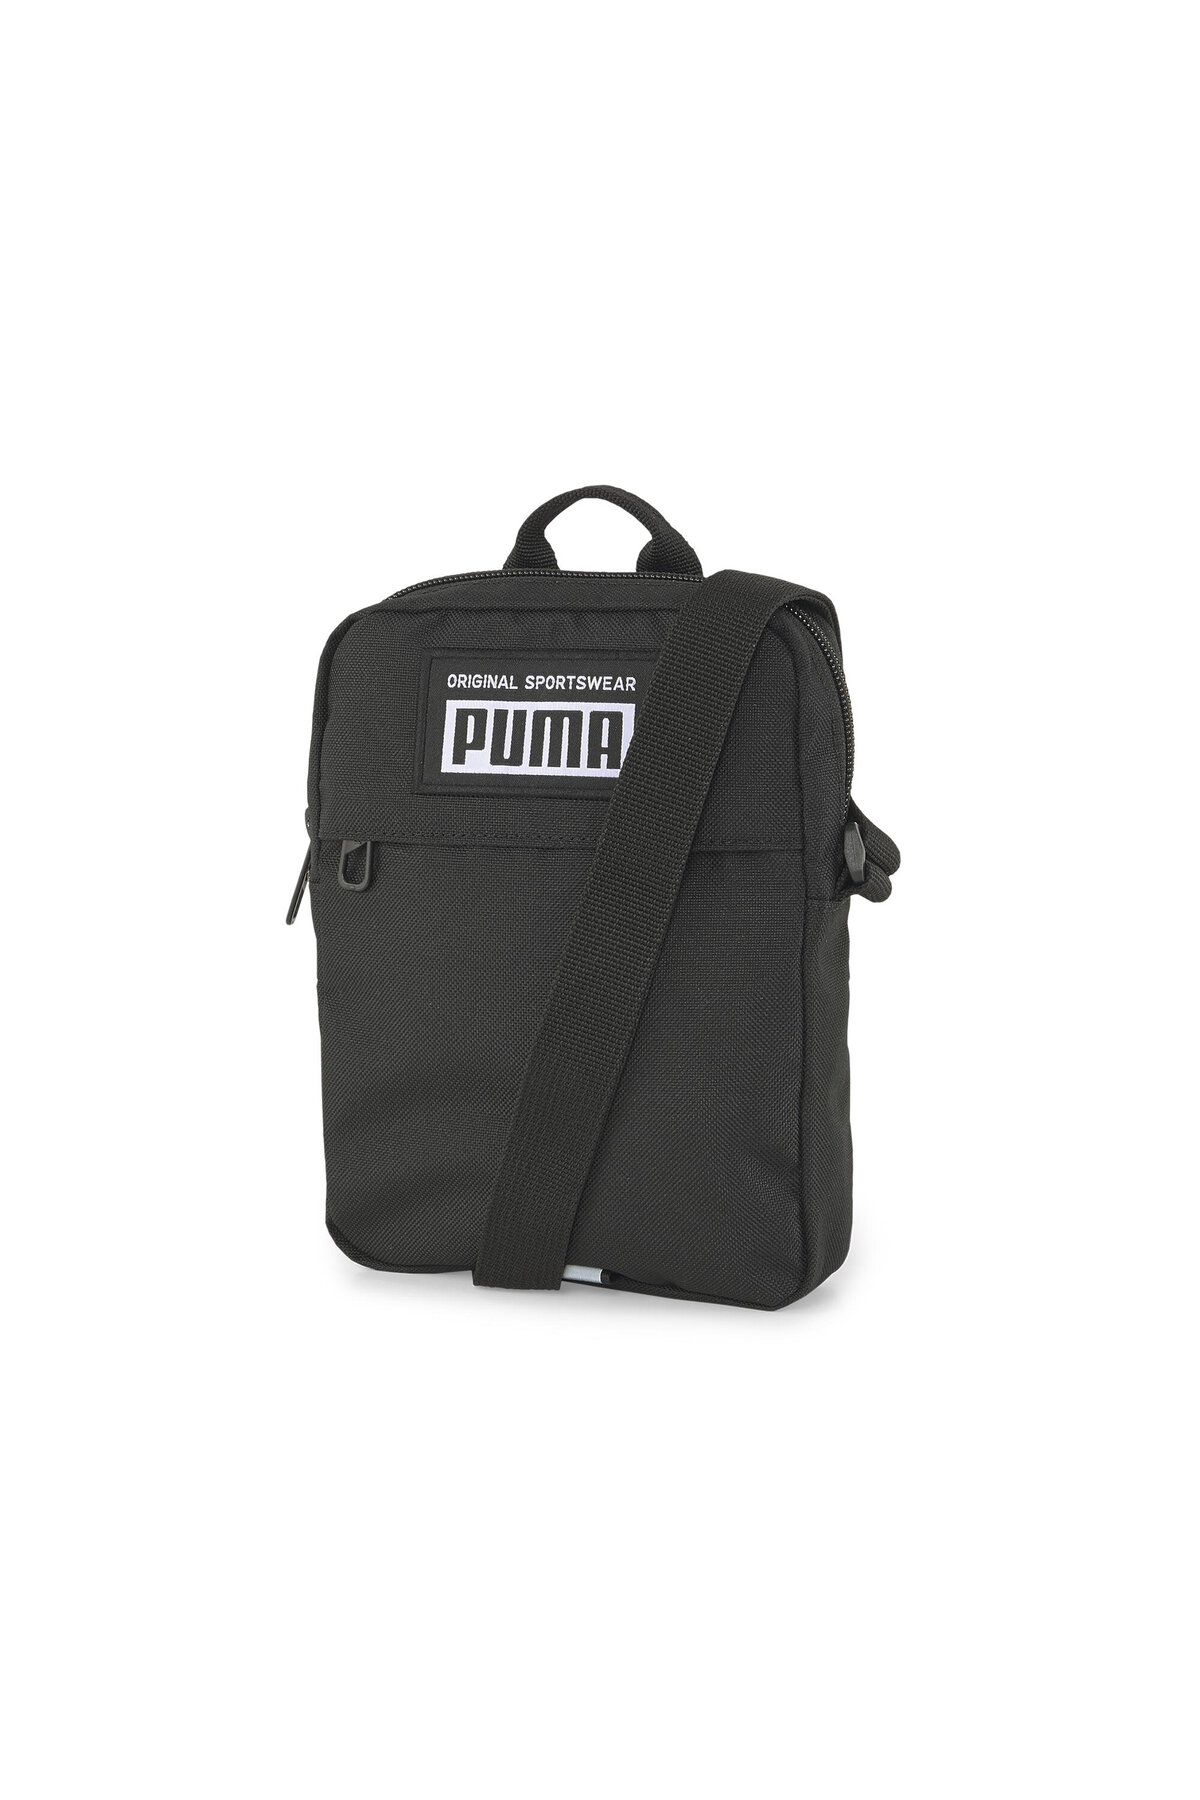 Puma Academy Portable Omuz Çantası 7913501 Siyah